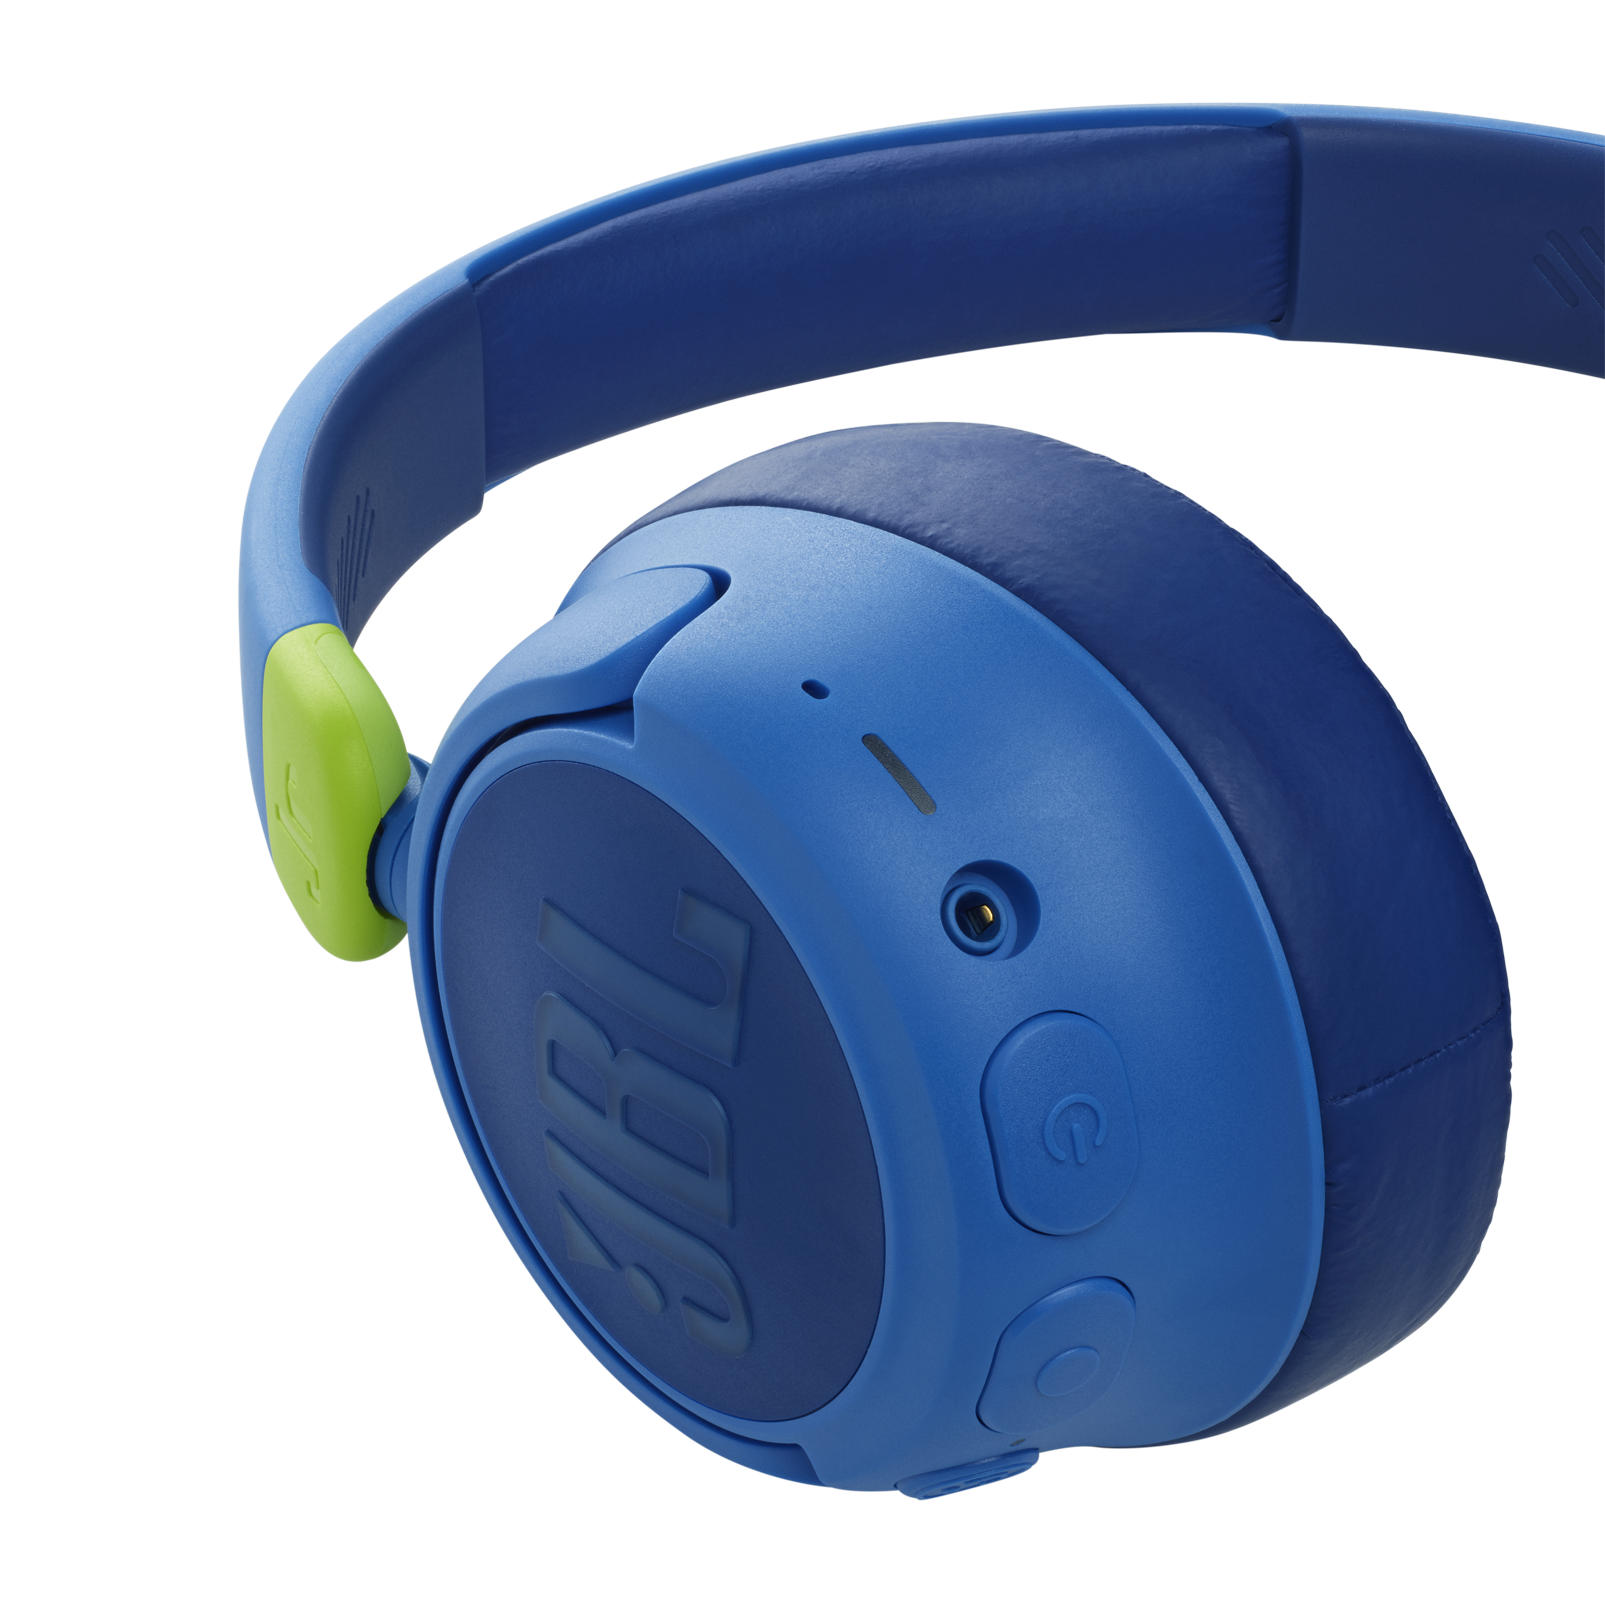 JBL JR 460NC - Blue - Wireless over-ear Noise Cancelling kids headphones - Detailshot 1